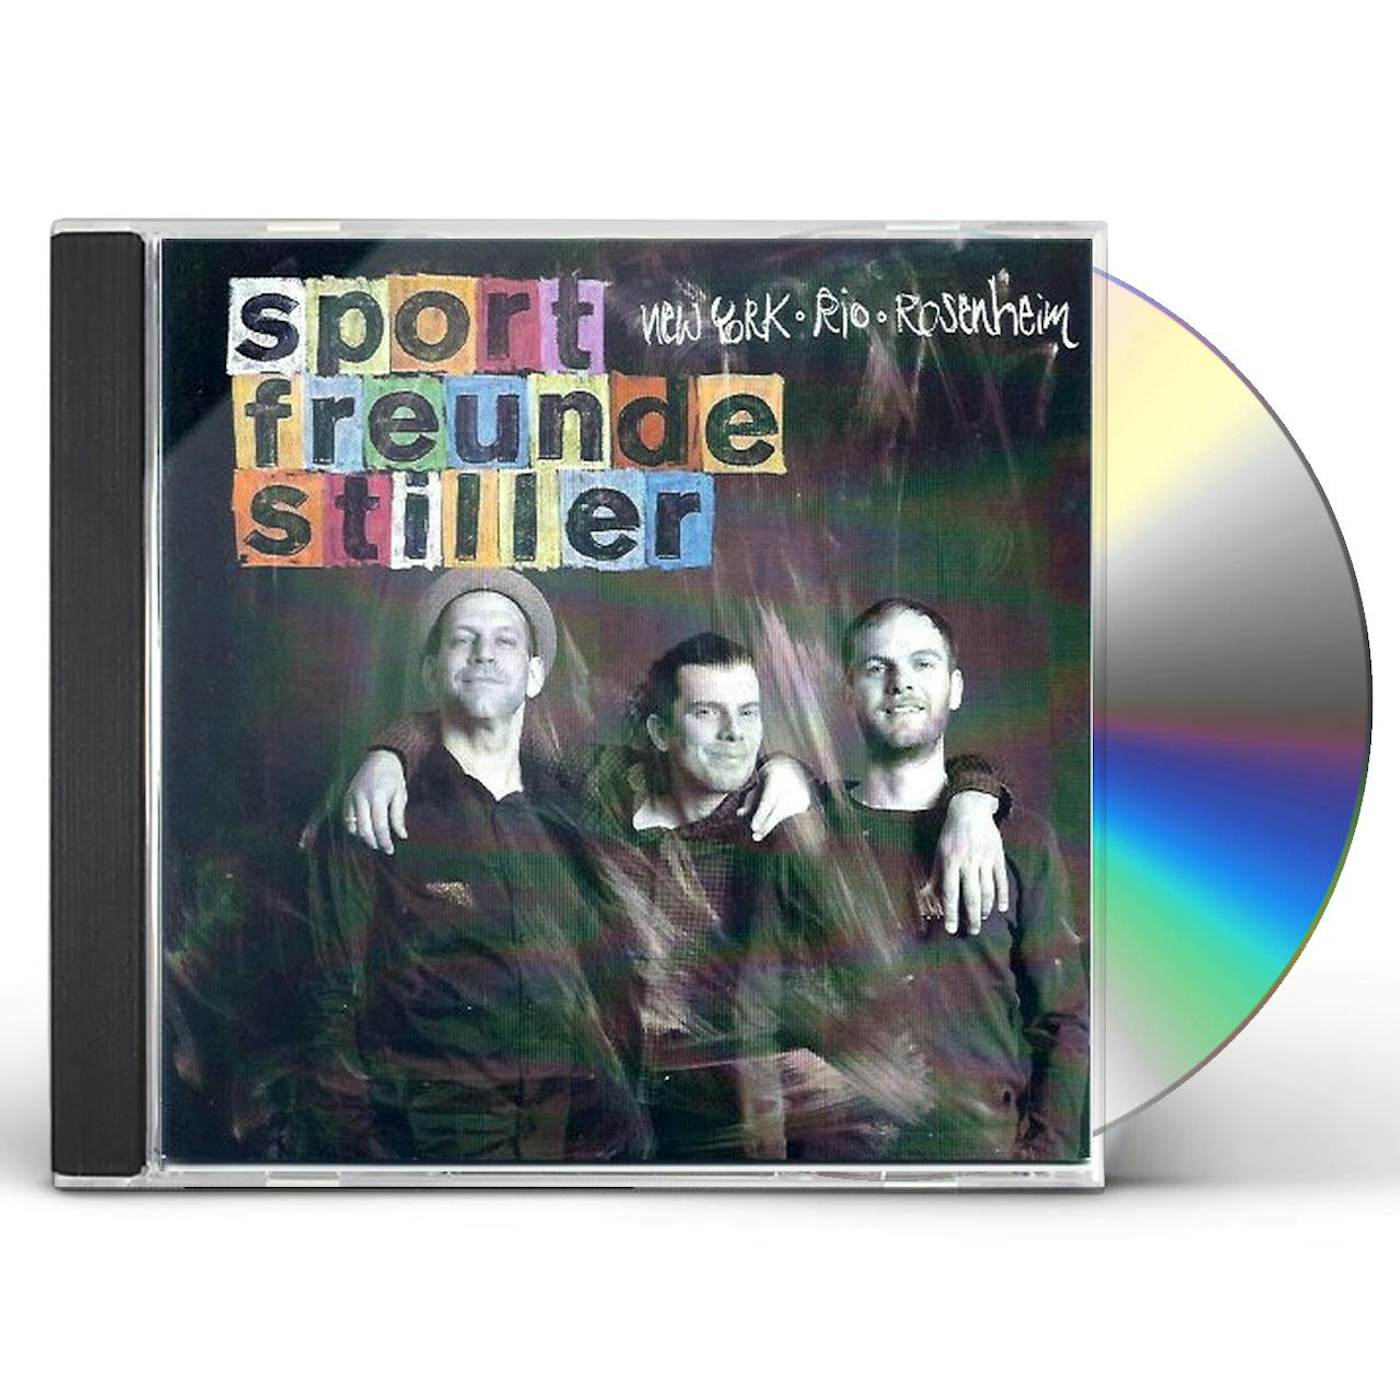 Sportfreunde Stiller NEW YORK, RIO, ROSENHEIM CD